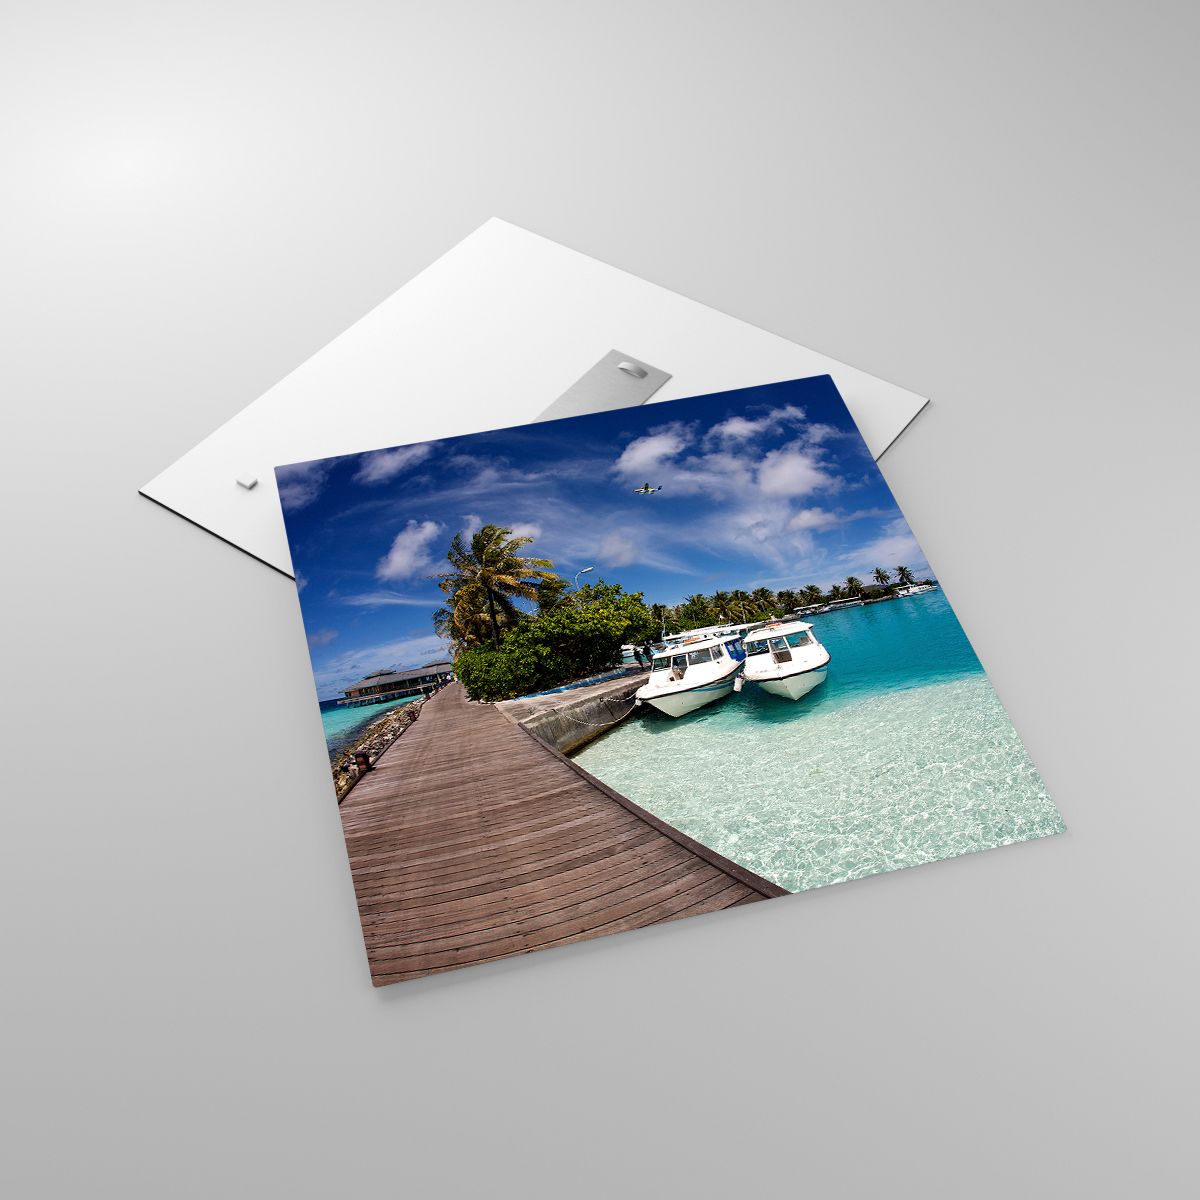 Glasbild Landschaft, Glasbild Paradies, Glasbild Meer, Glasbild Malediven, Glasbild Reisen